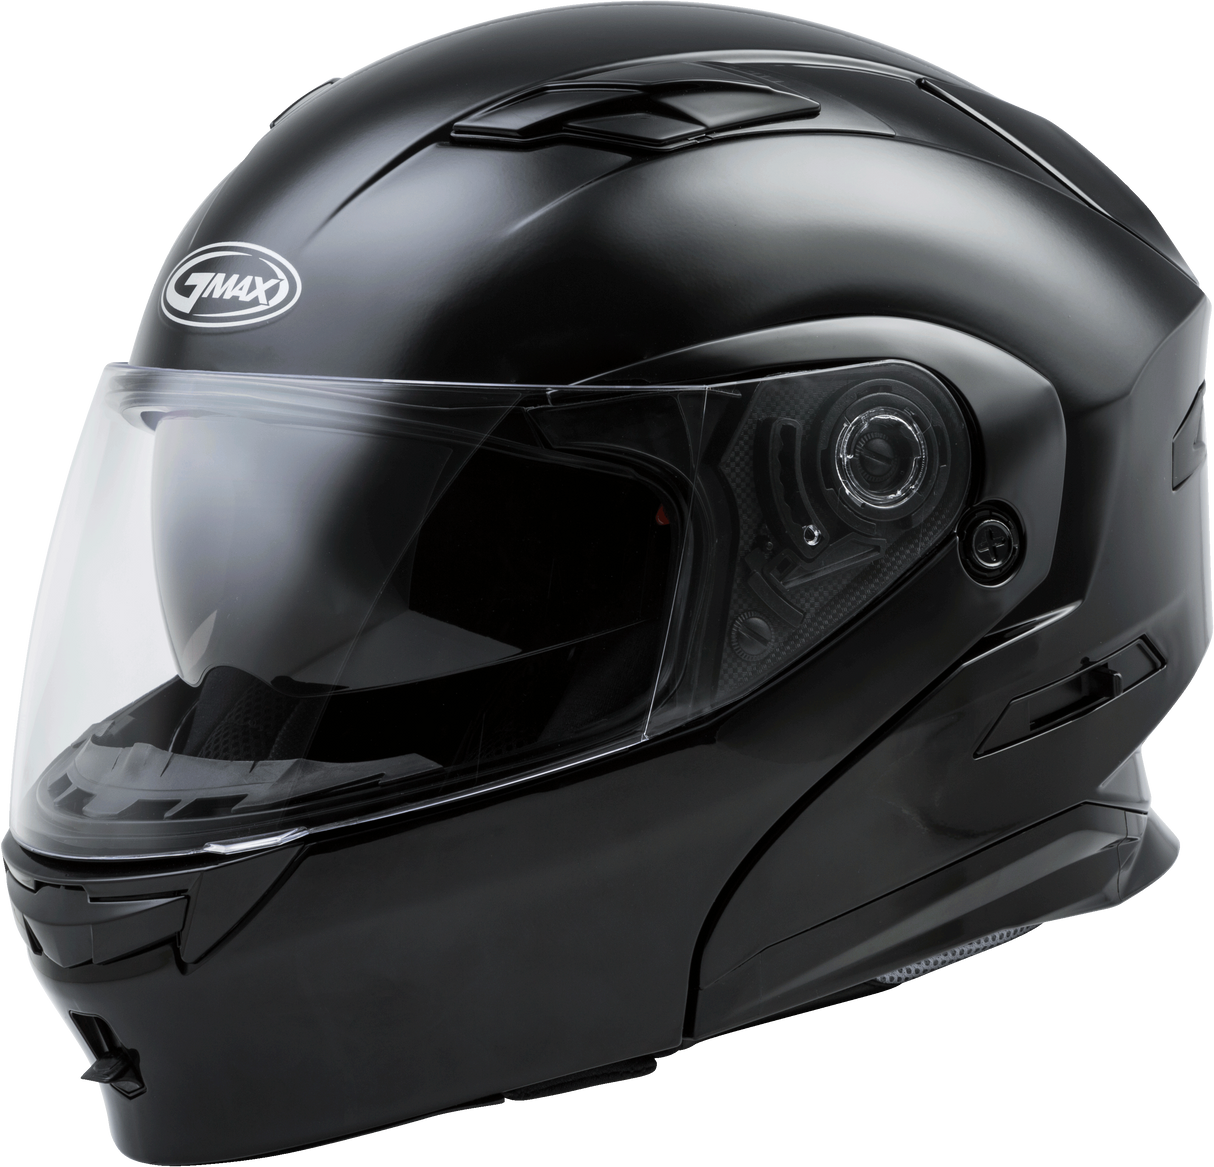 GMAX Md 01 Modular Helmet Black Lg for Powersports